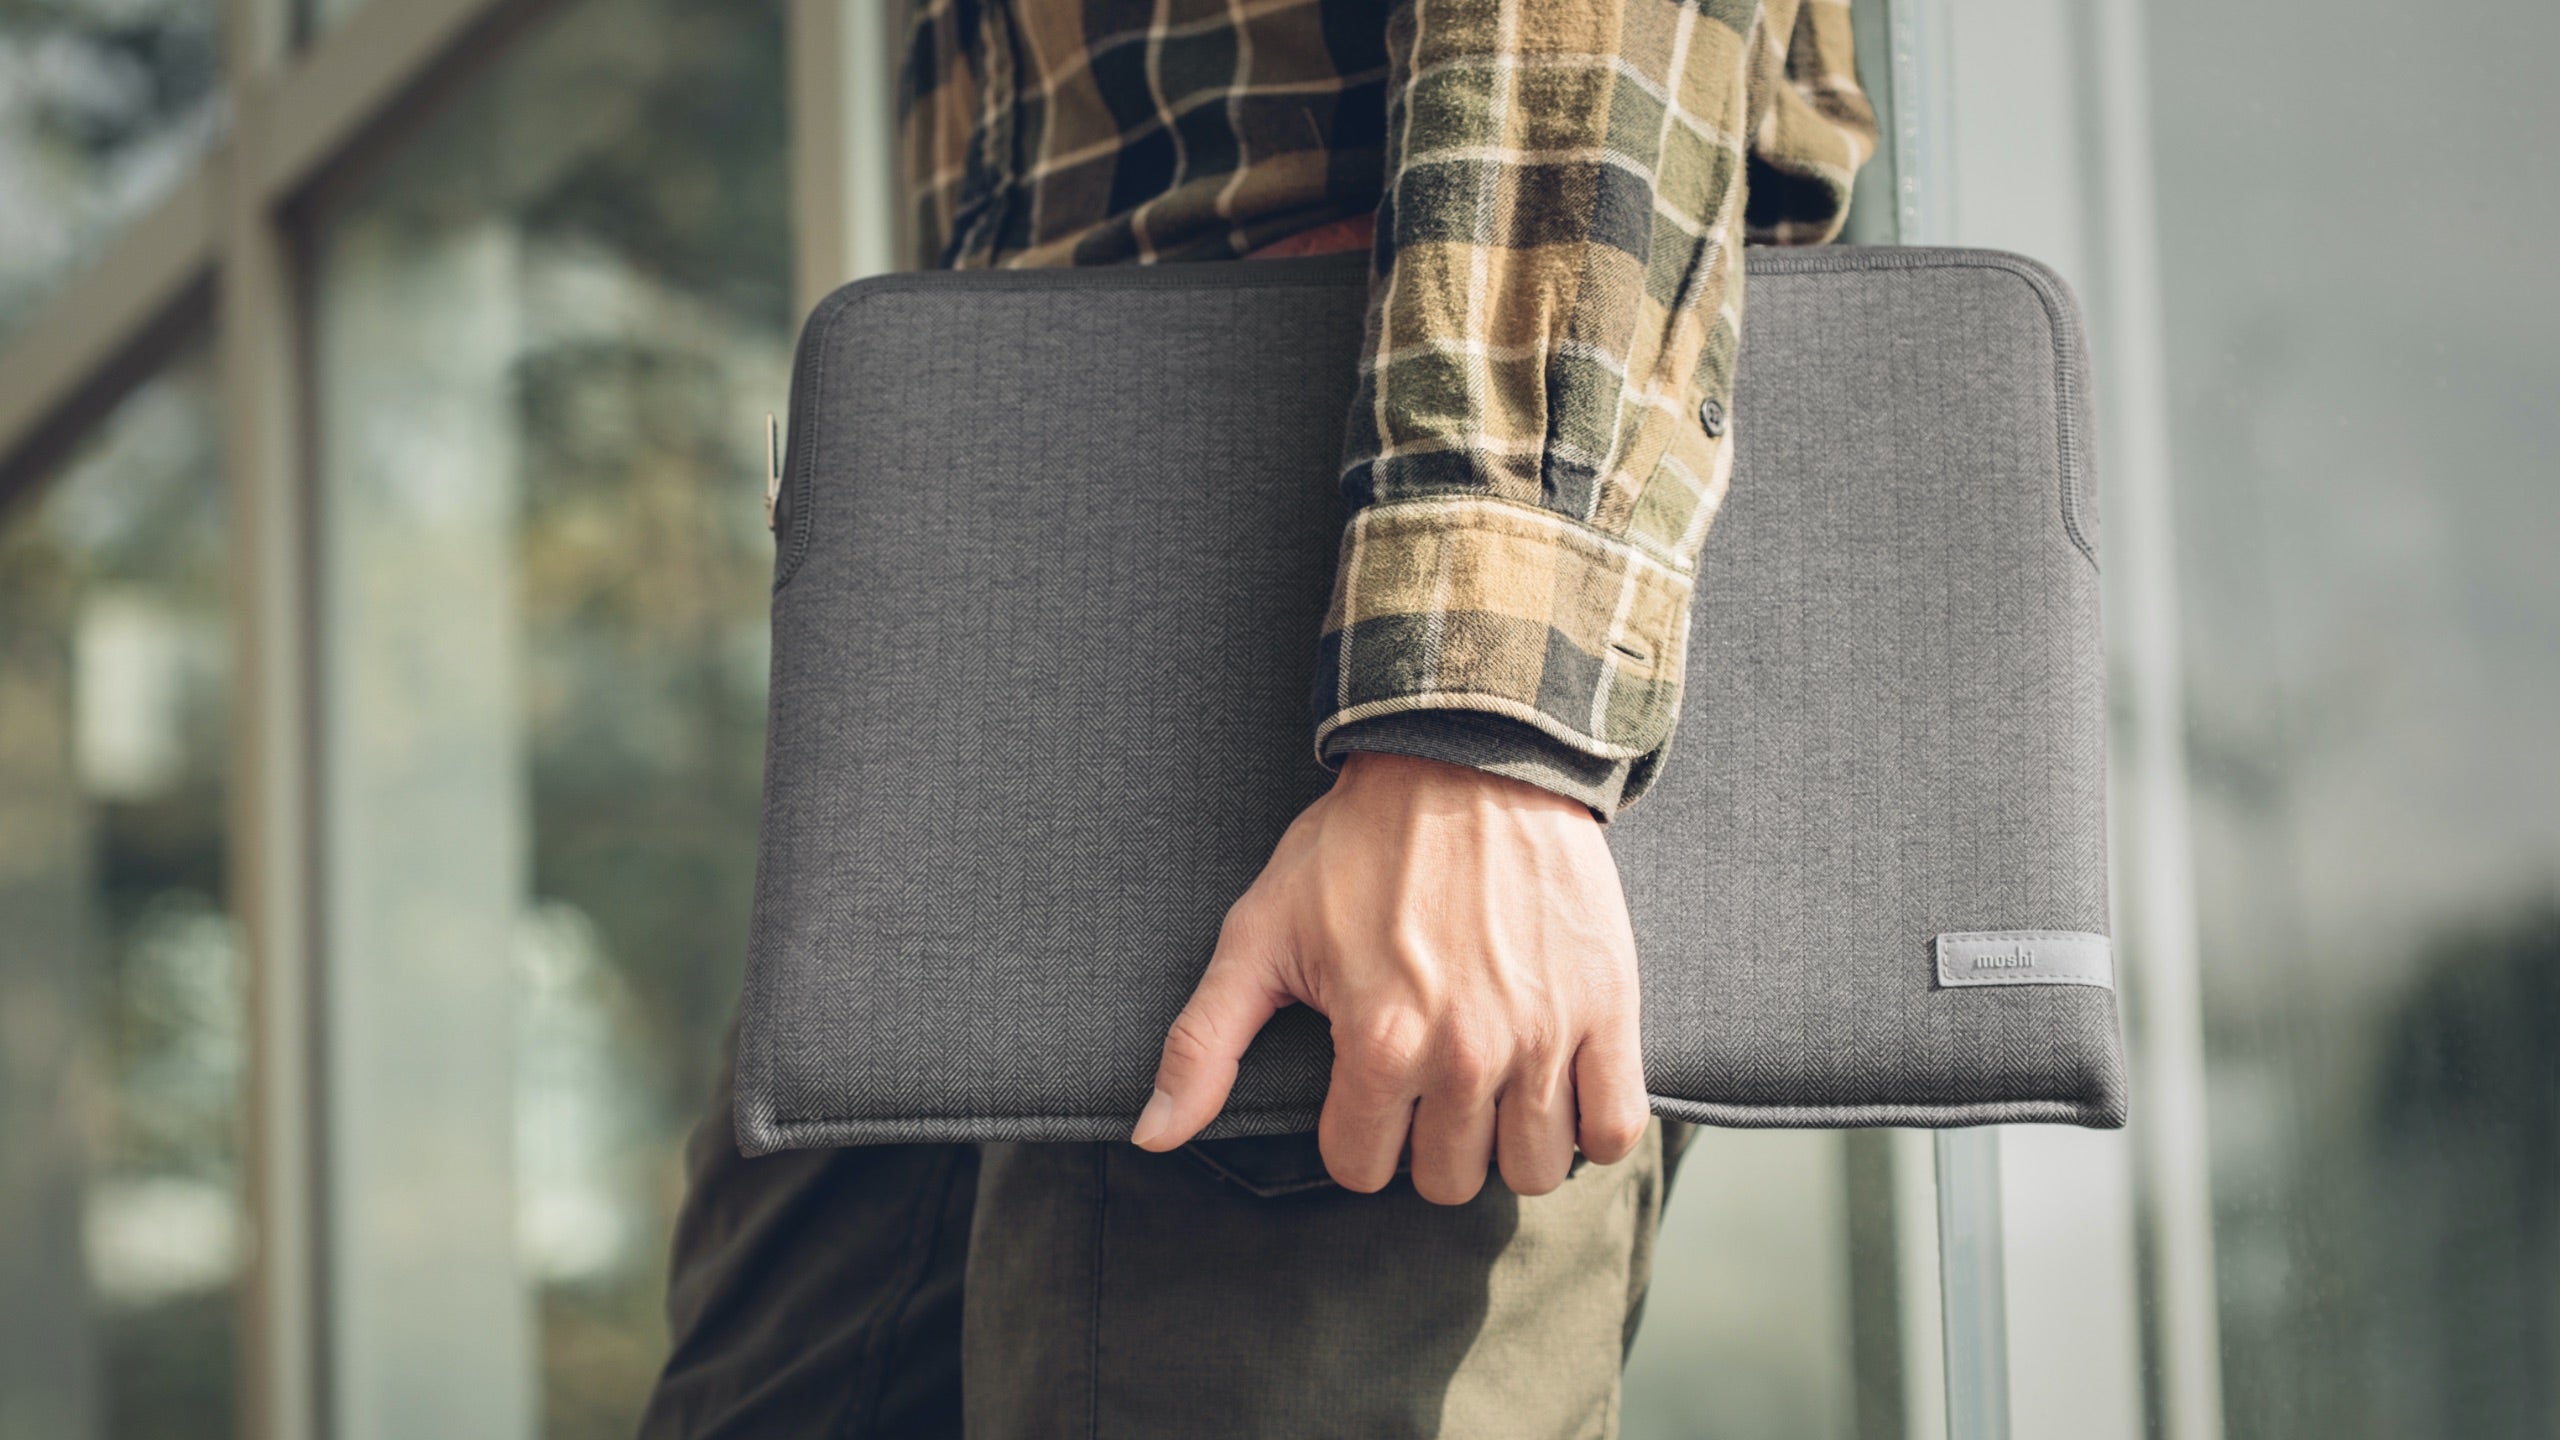 Moshi Pluma Laptop Sleeve 15/16-inch - Herringbone Gray